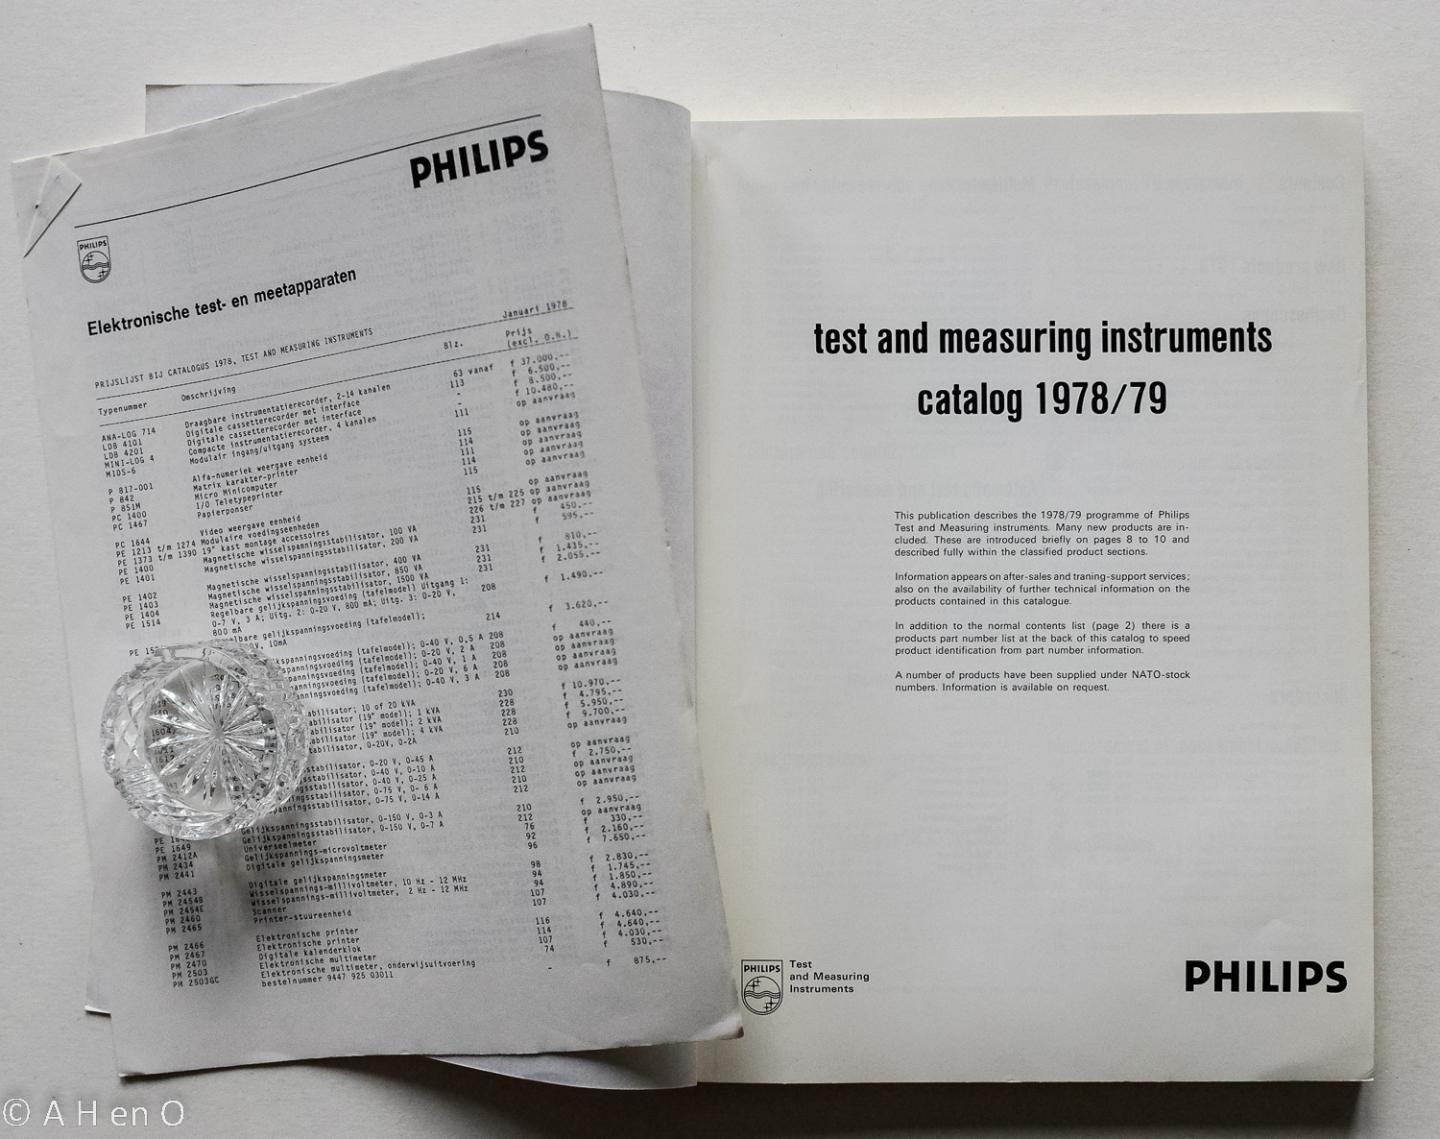 Philips Gloeilampenfabrieken Nederland n.v., Eindhoven - Test and  measuring instuments - catalog 1978/79